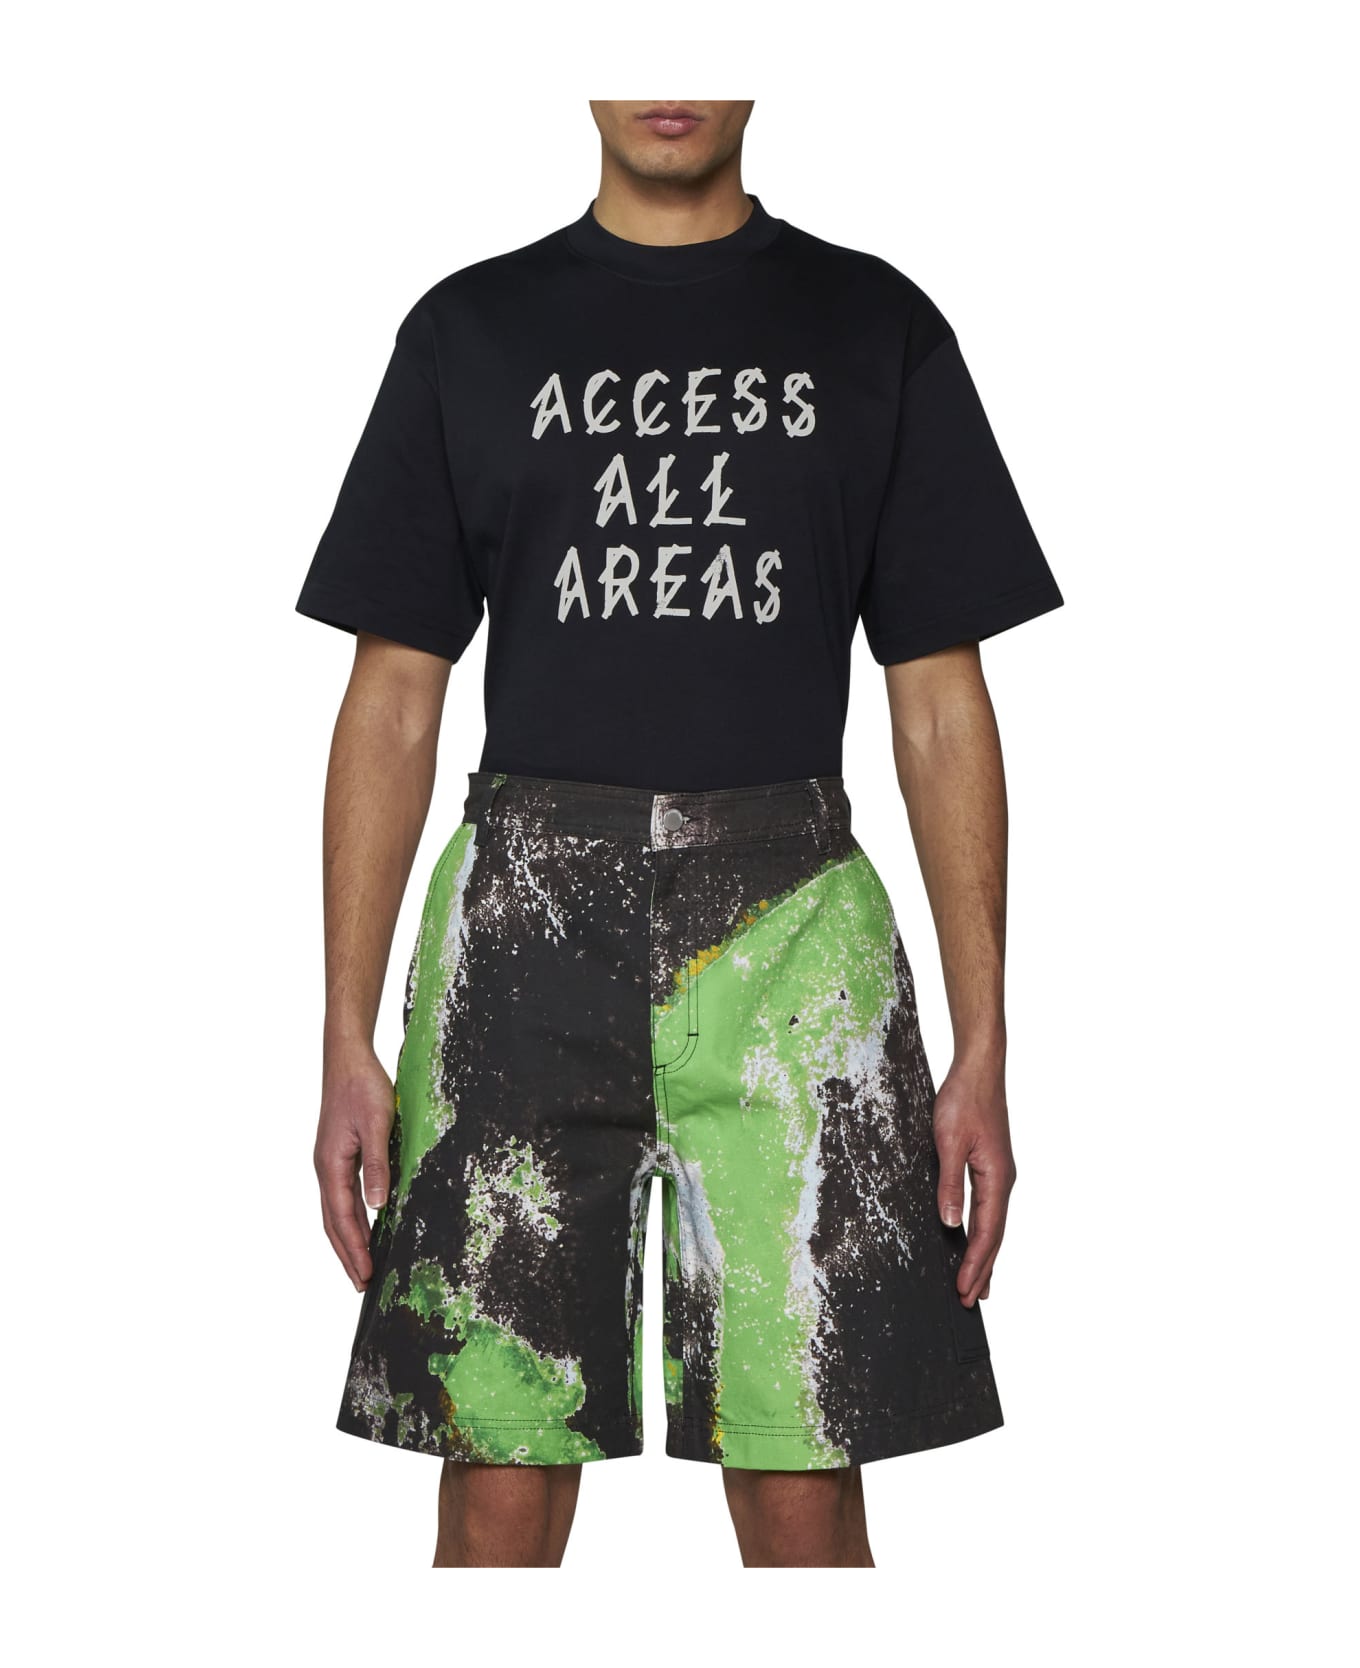 44 Label Group Shorts - Black+grunge green